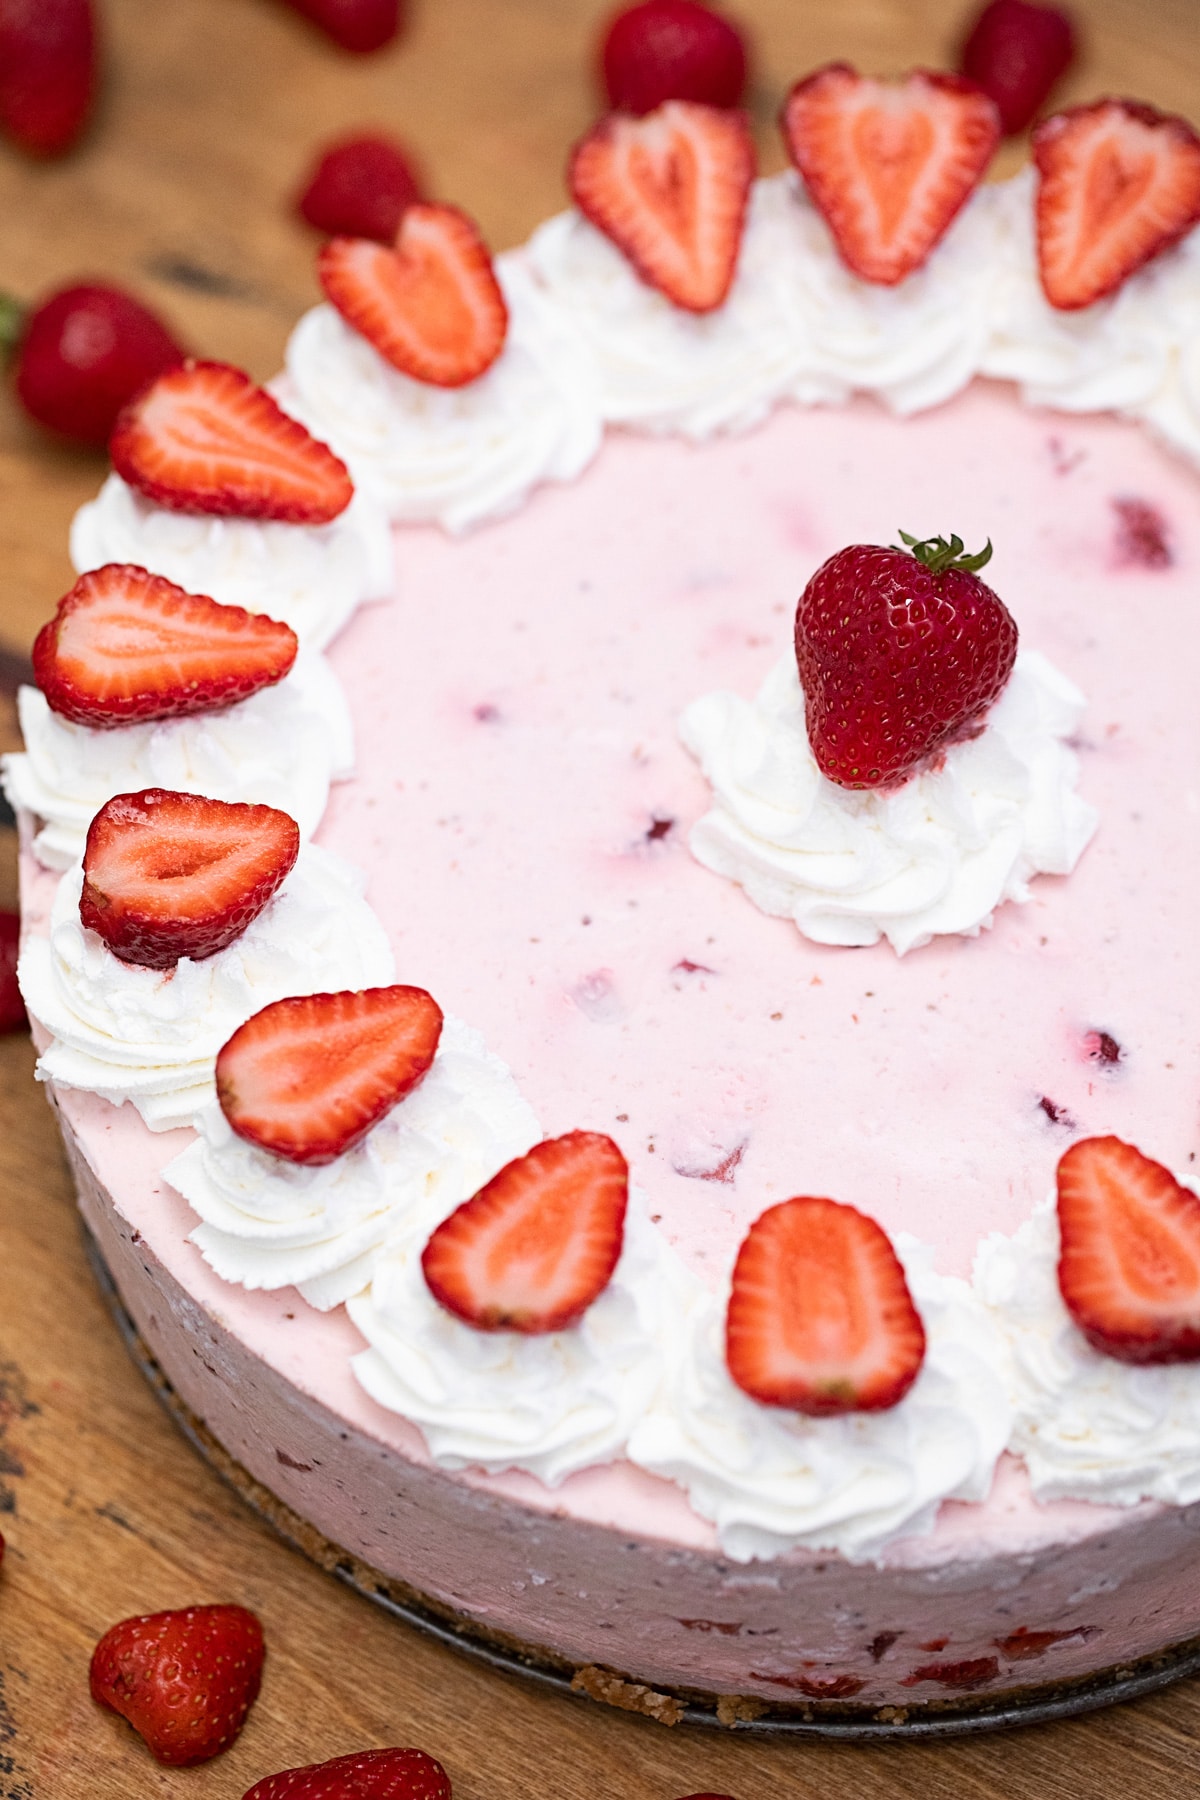 Whole no bake strawberry cheesecake